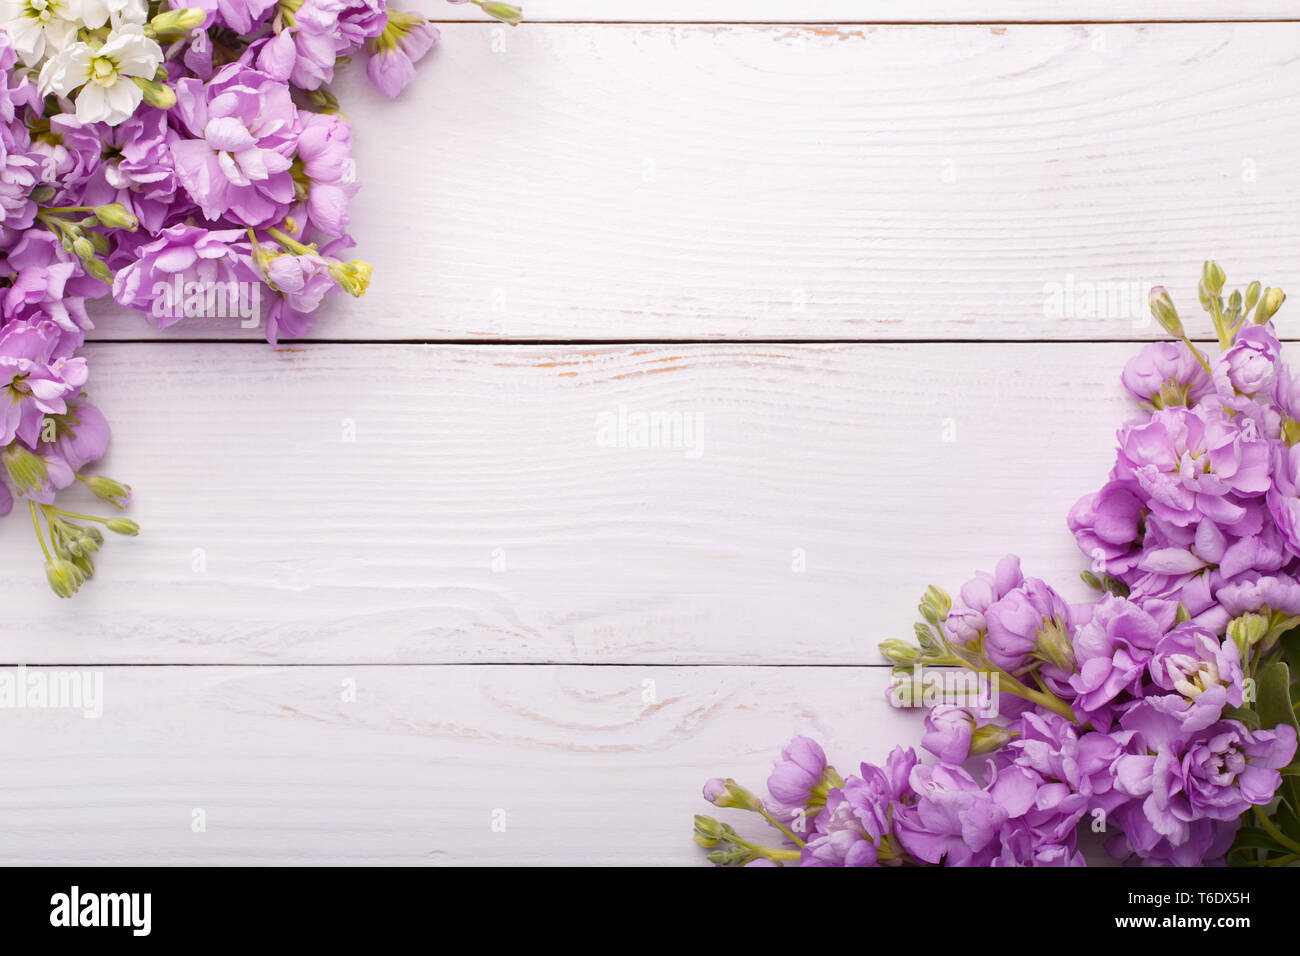 Lilac matthiola flowers Stock Photo